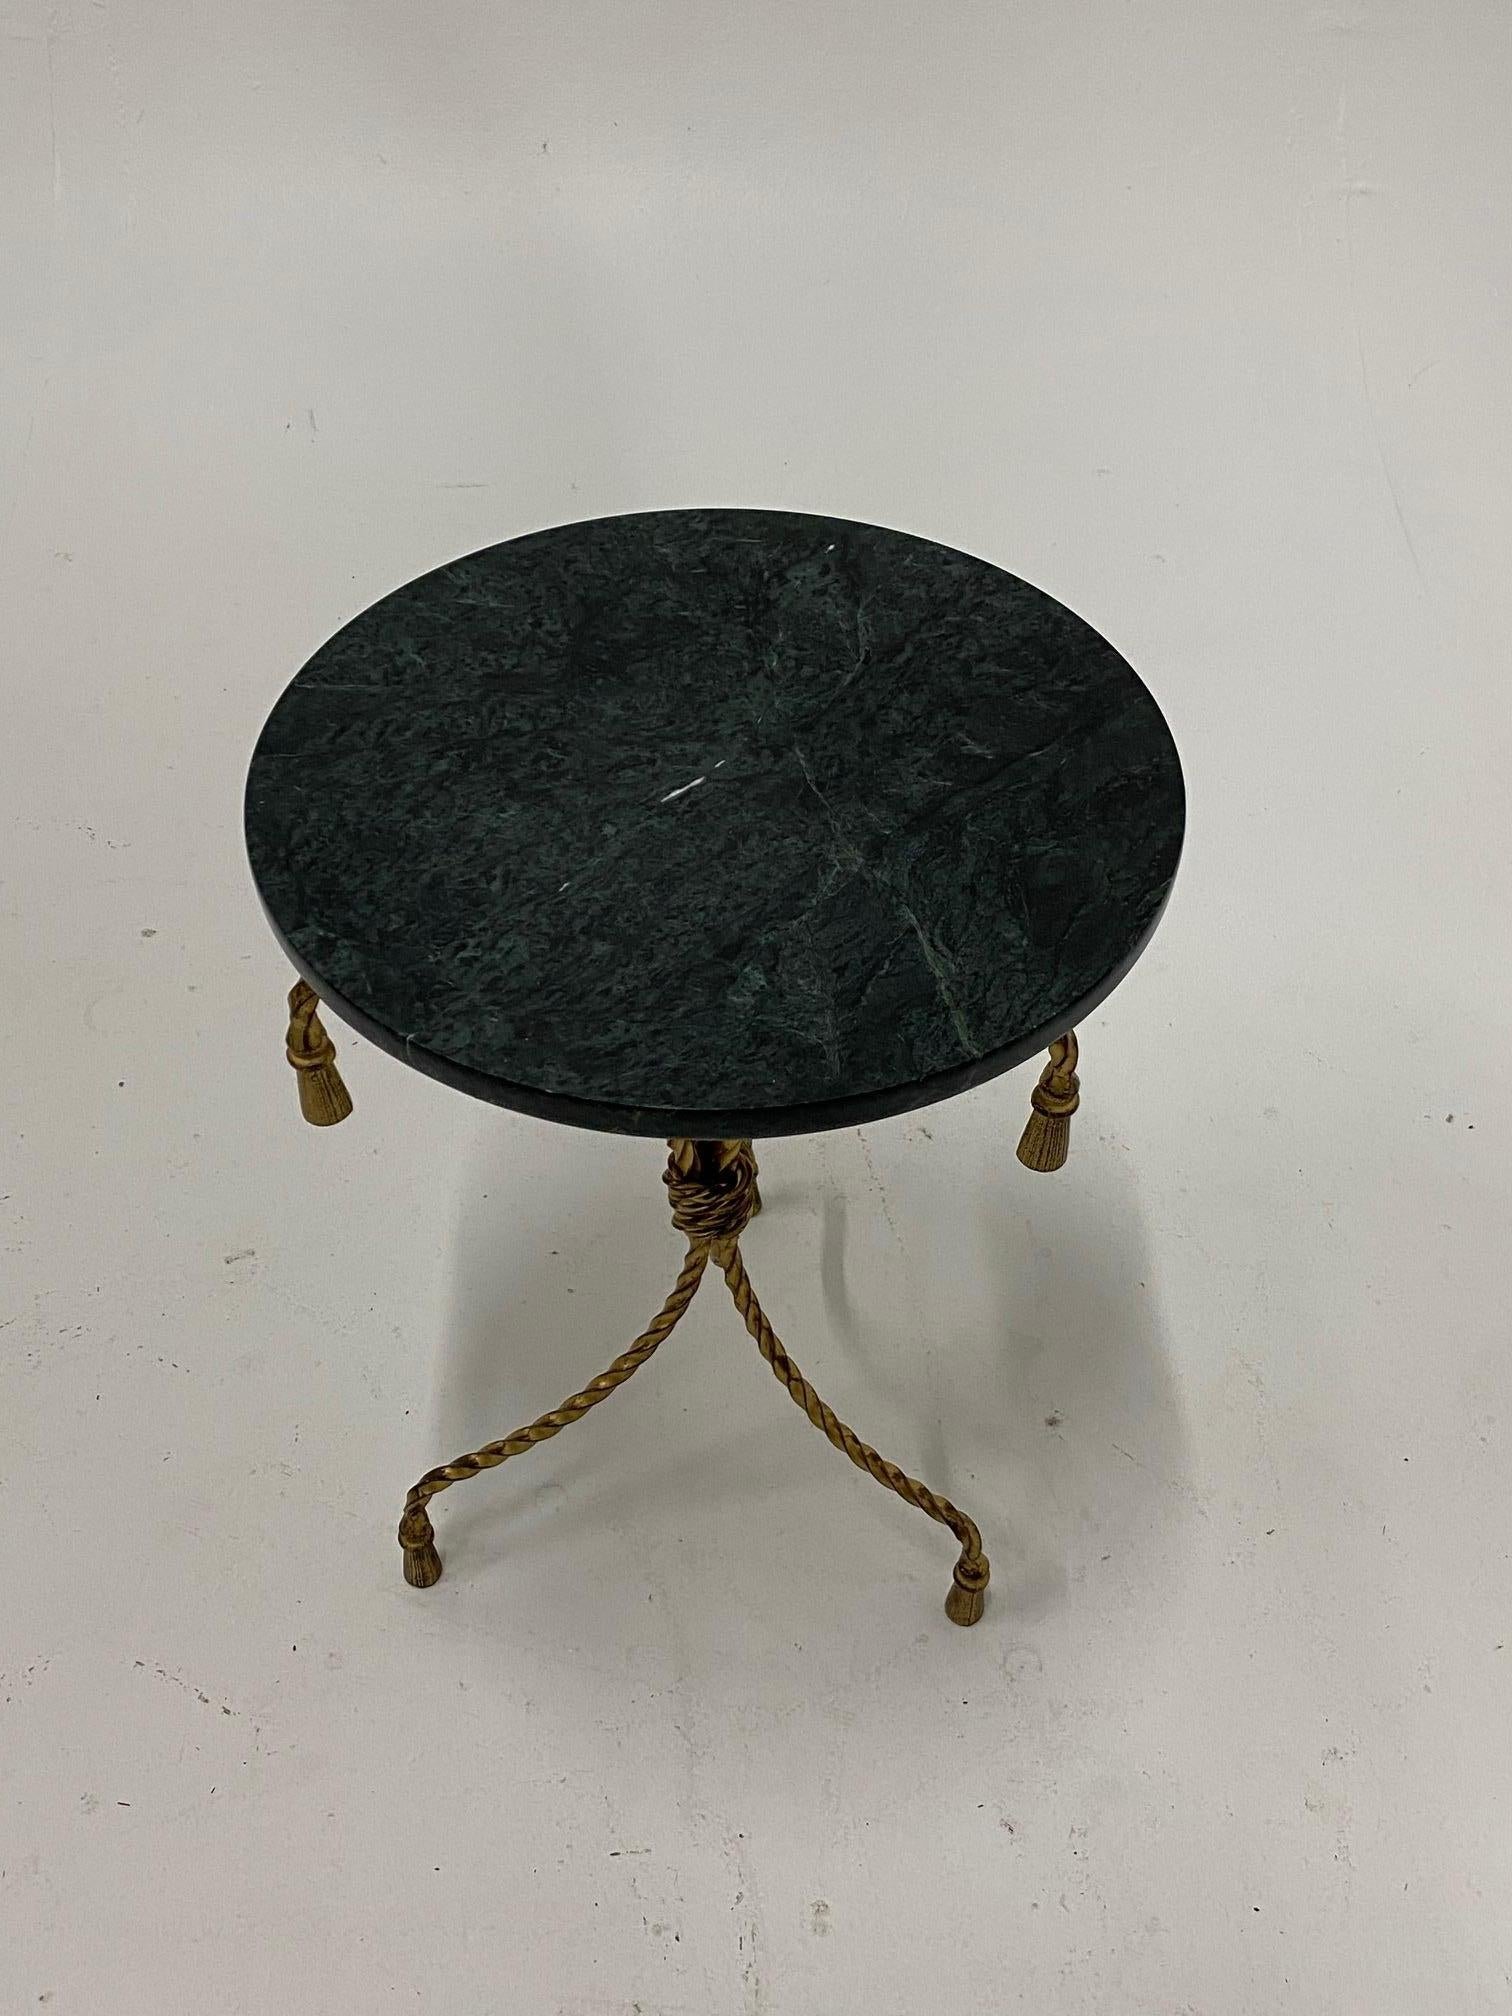 Chic Italian martini table having braided tassel motif gilt iron base and sleek black marble round top.